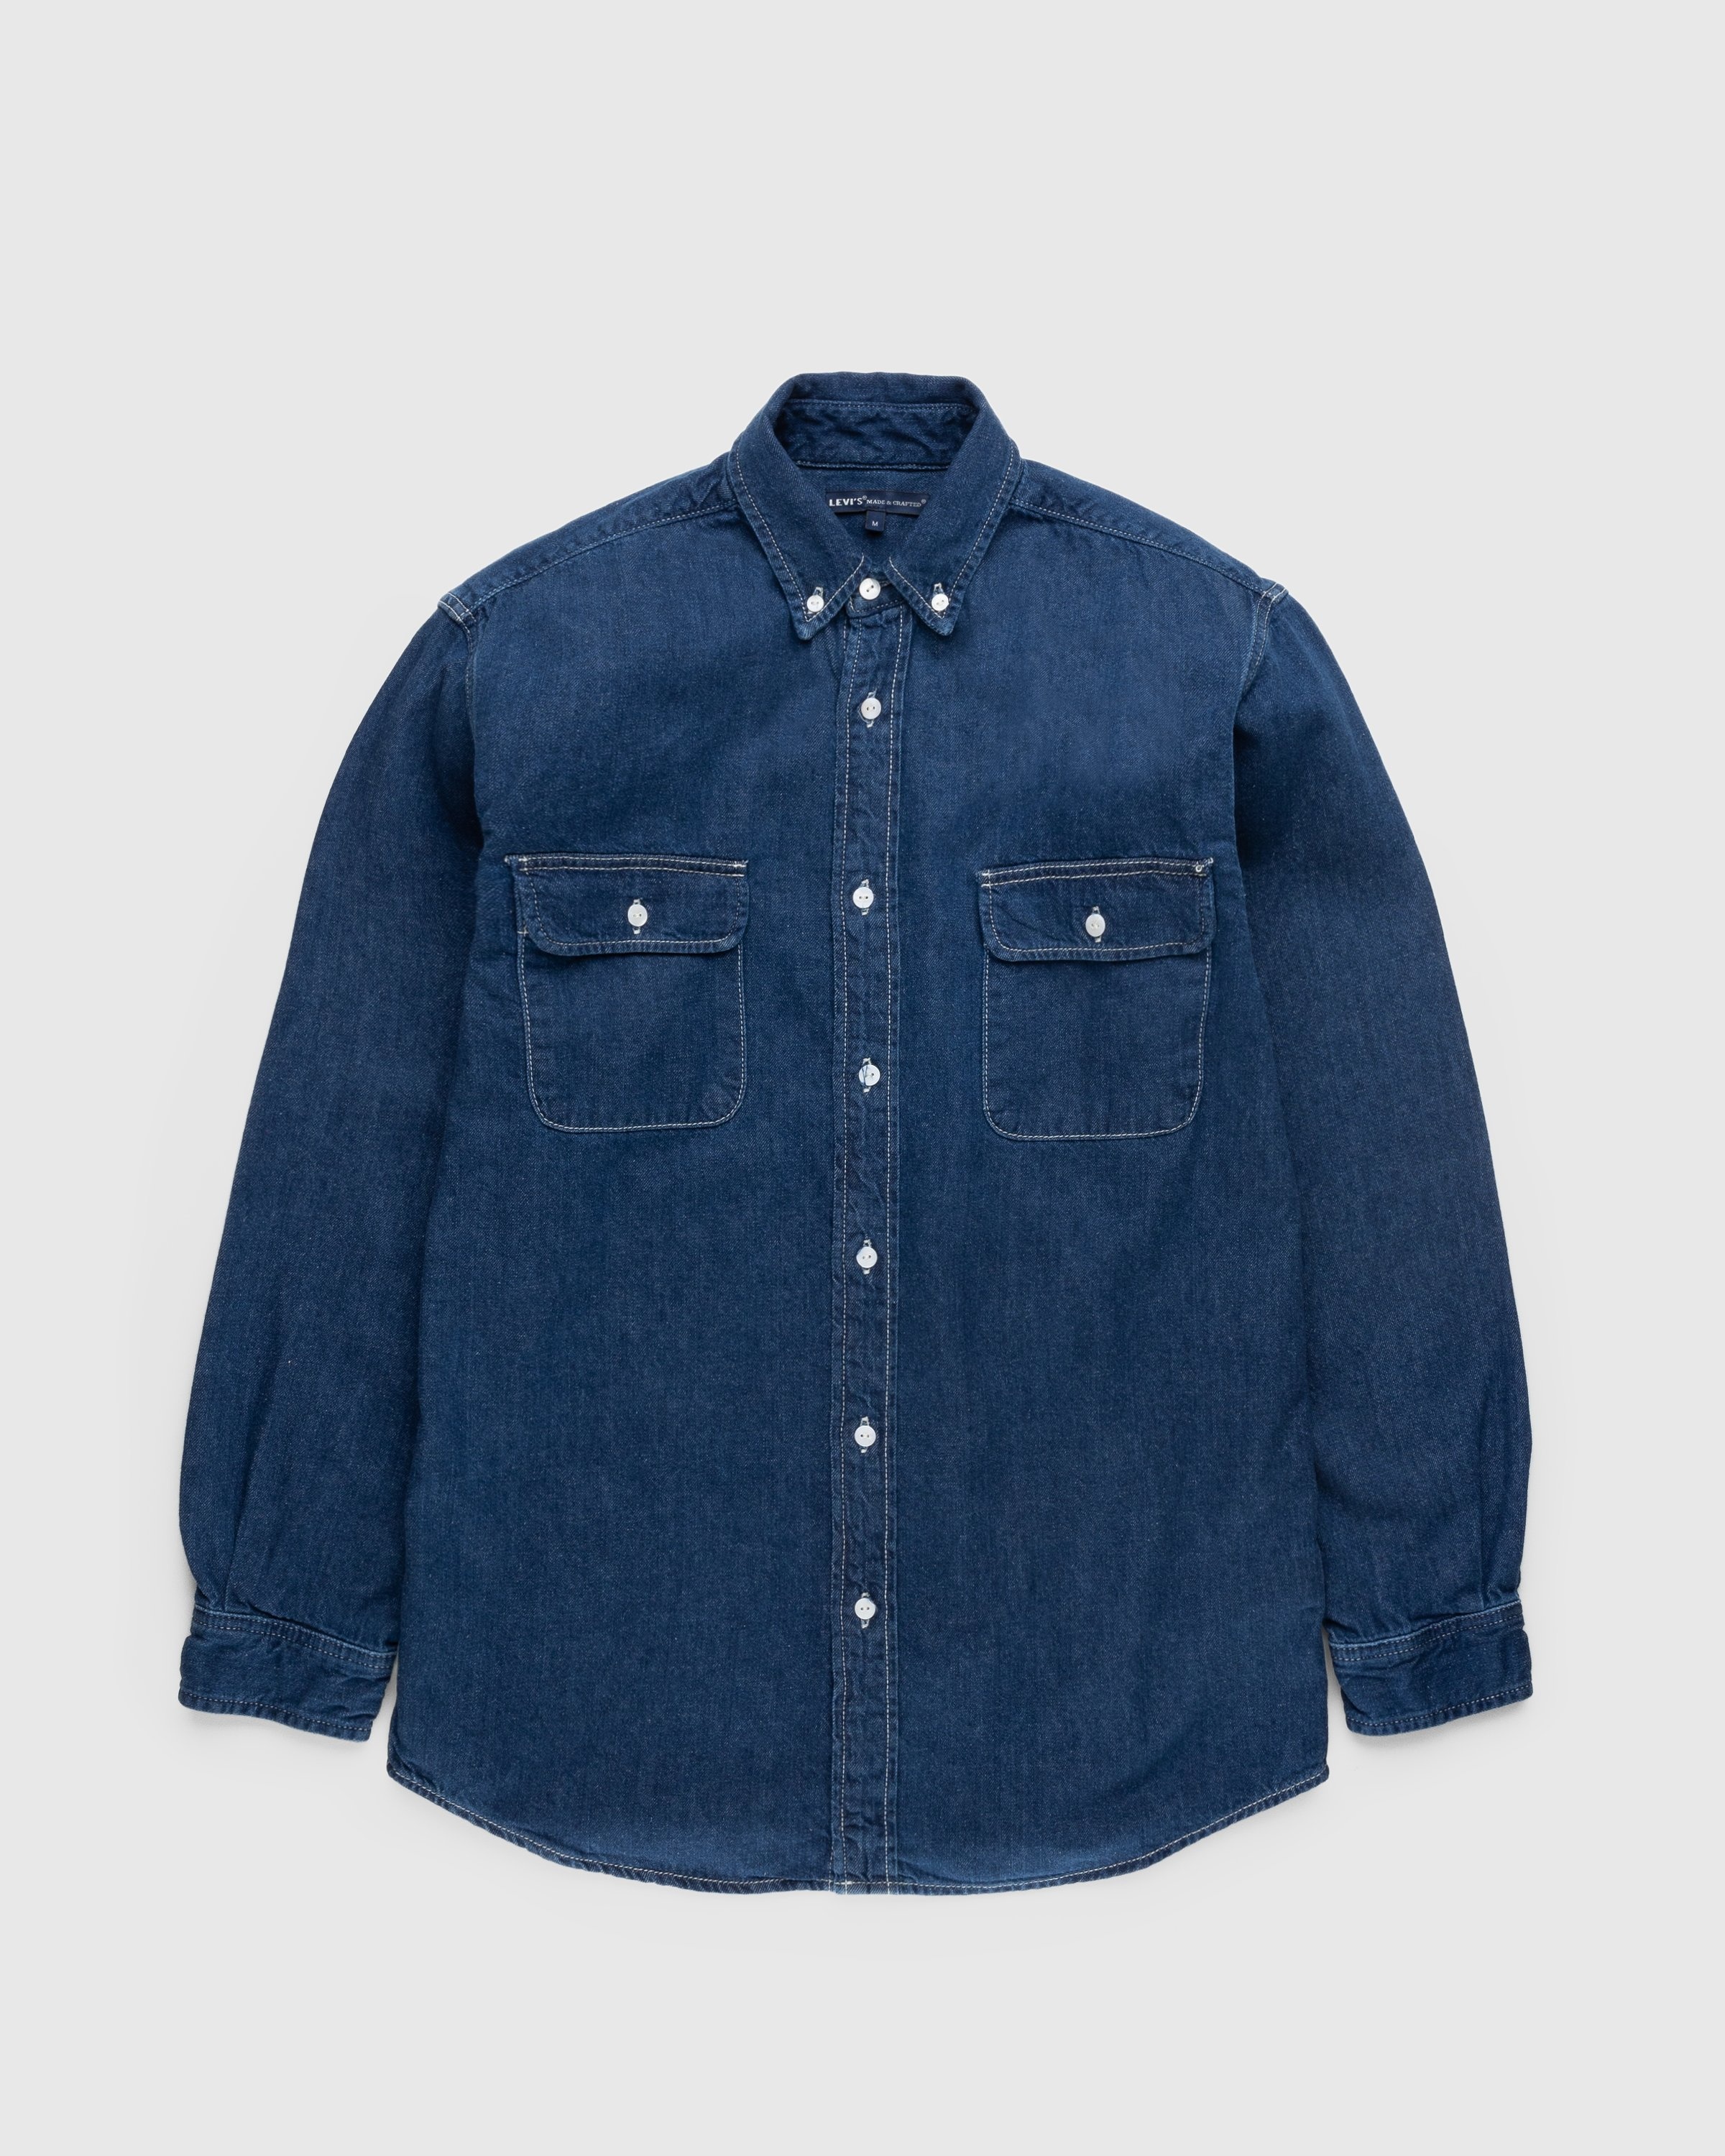 Levi's – LMC Classic Denim Shirt Indigo Rinse Blue | Highsnobiety Shop